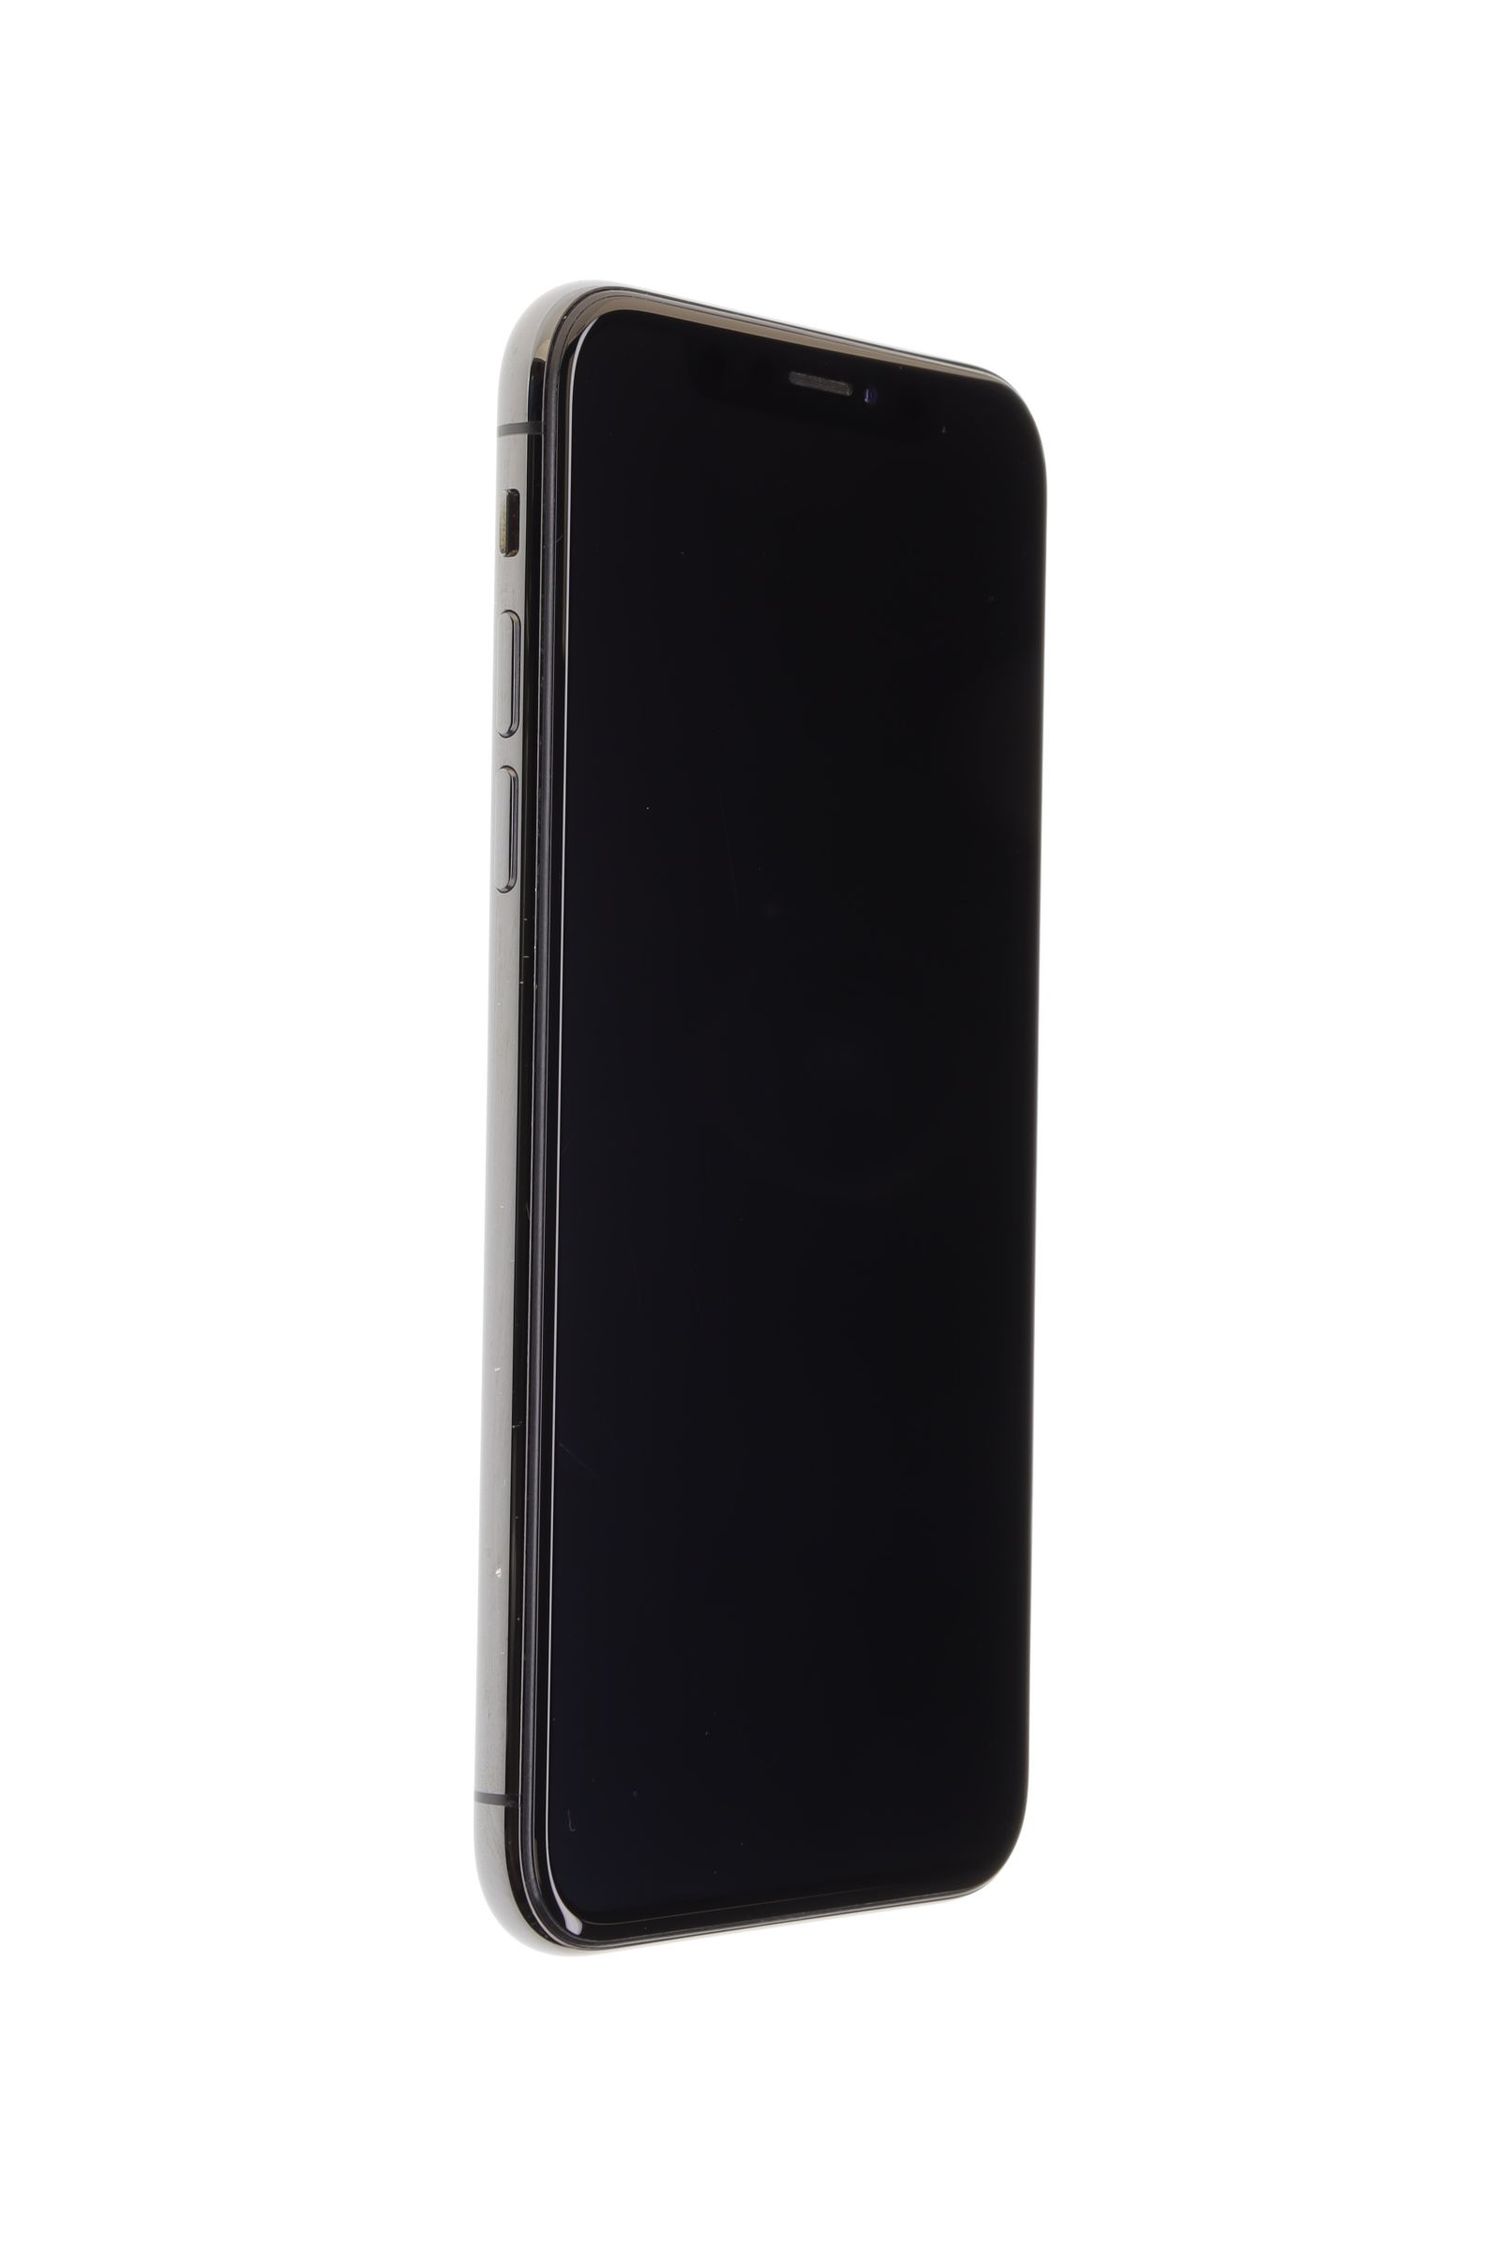 Mobiltelefon Apple iPhone X, Space Grey, 256 GB, Foarte Bun